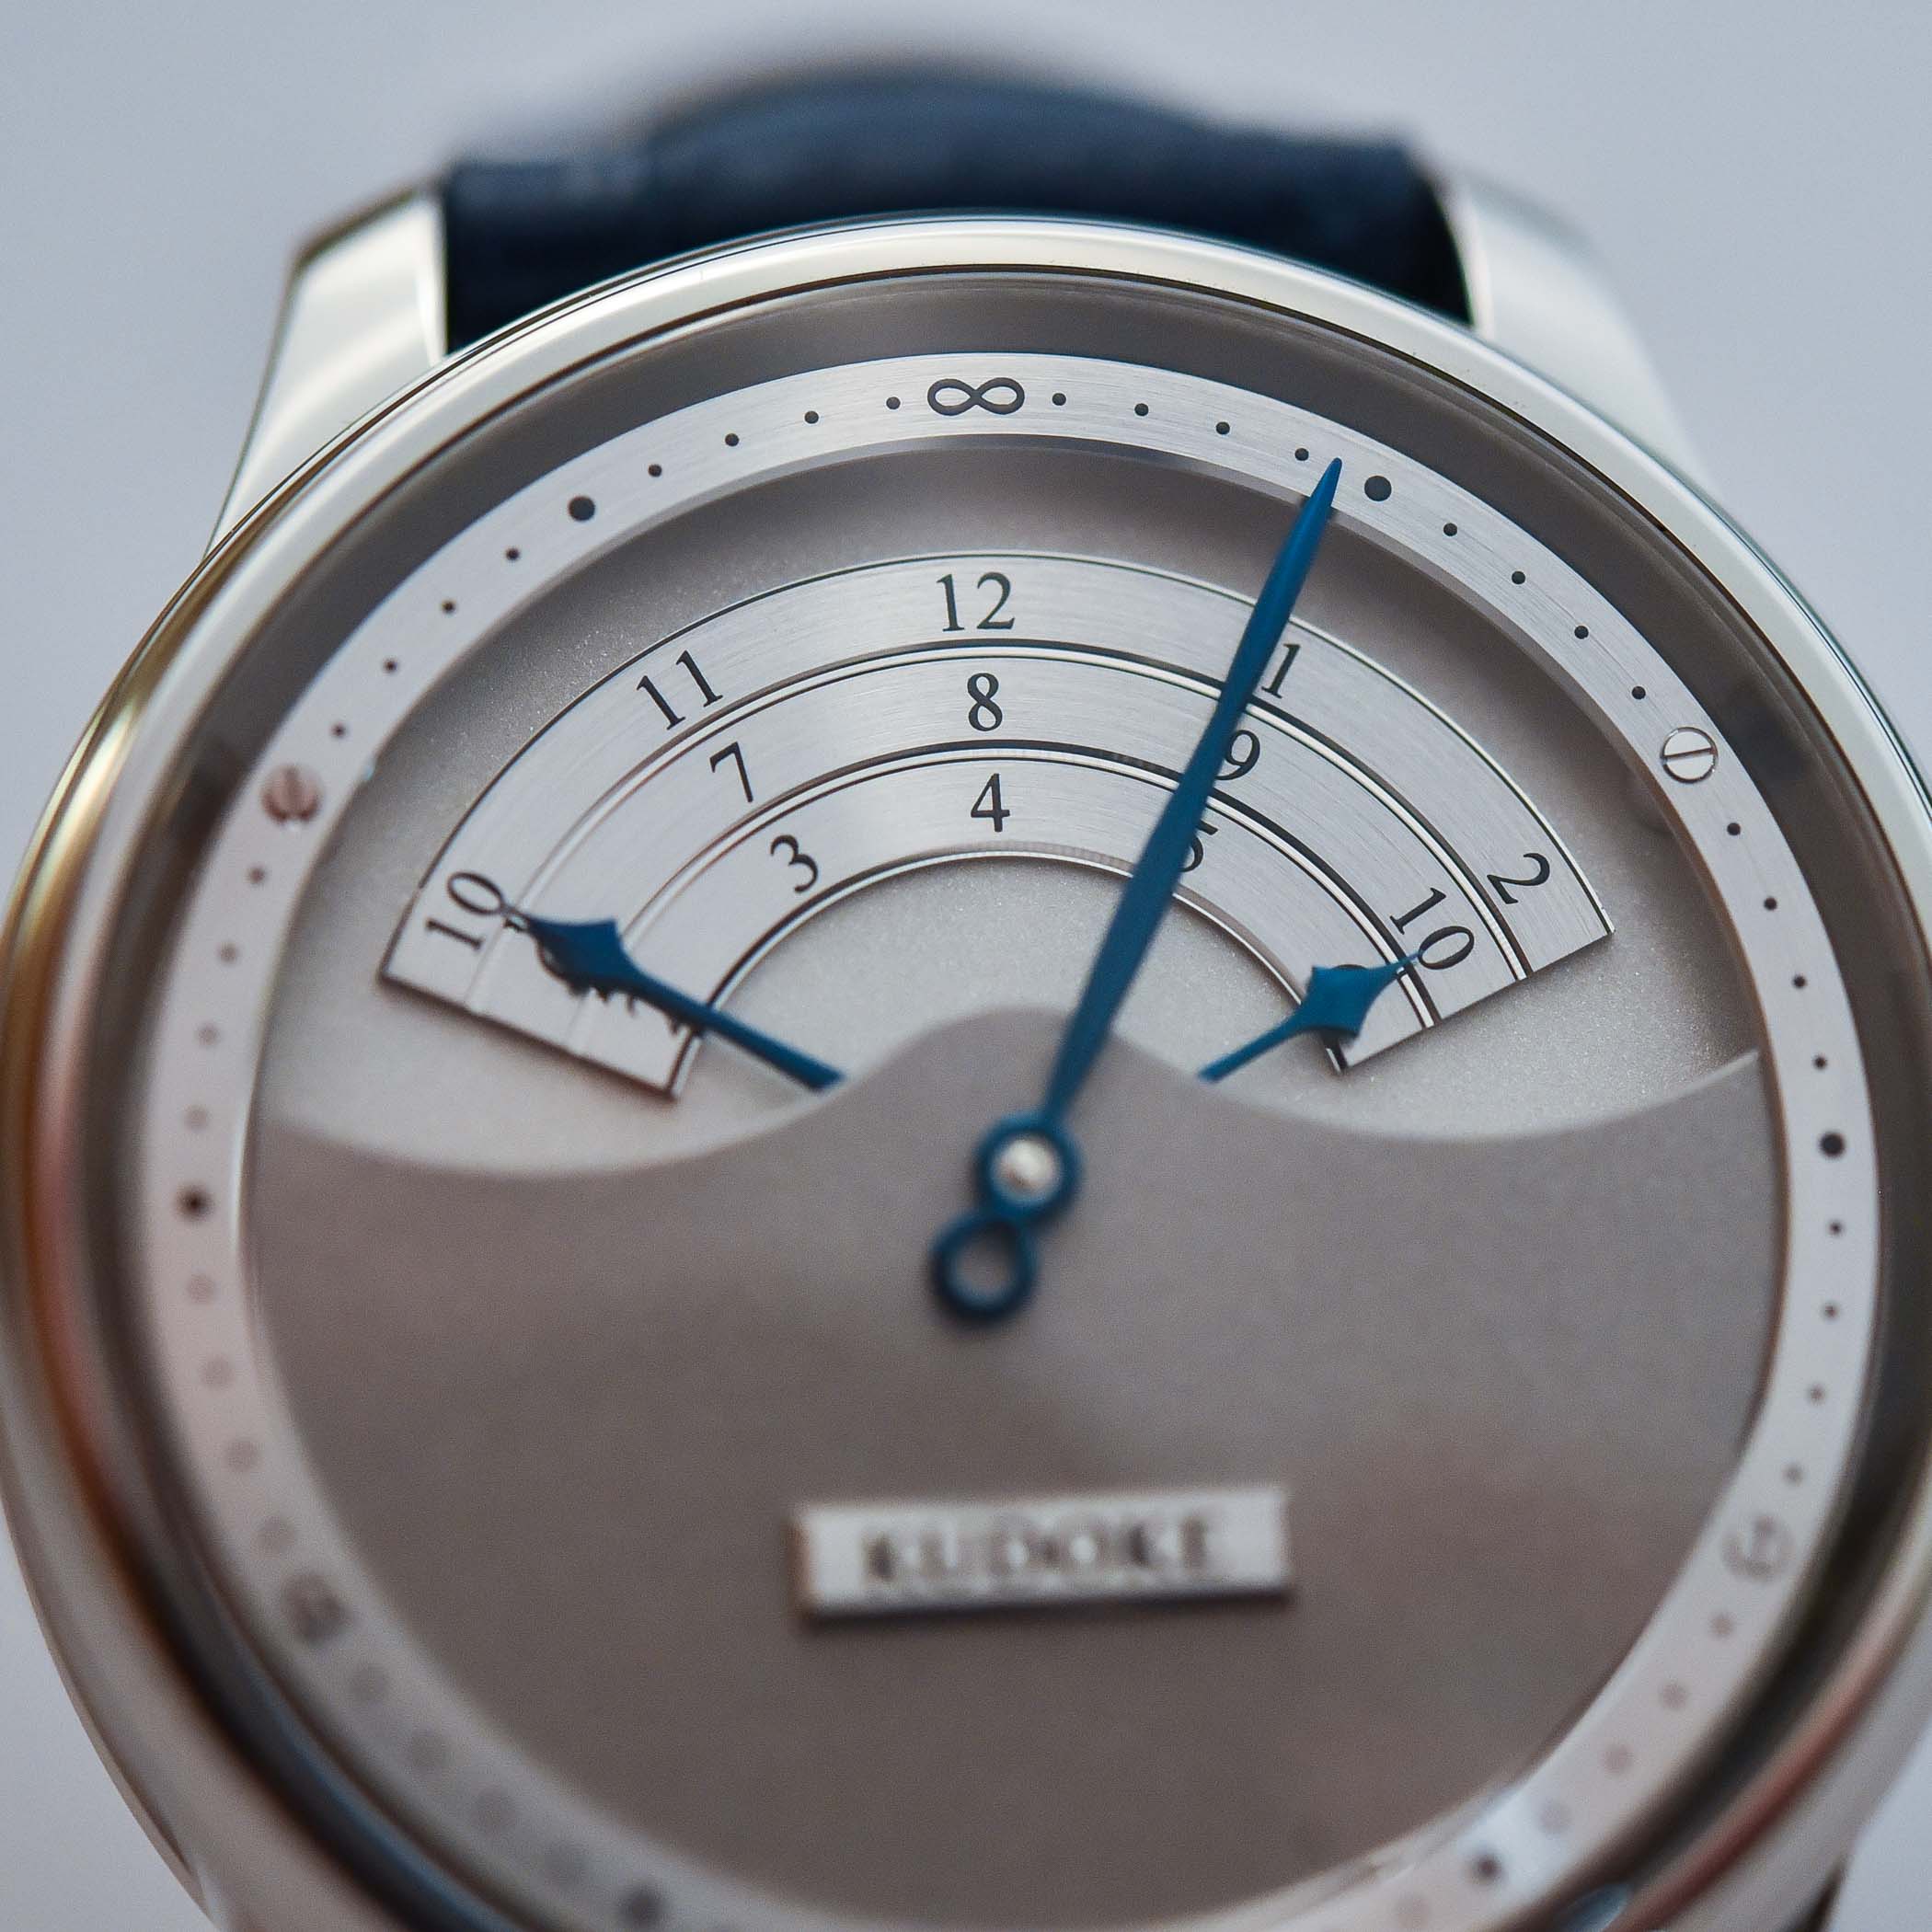 Hands-On Kudoke 3 HANDwerk - independent watchmaking - 8